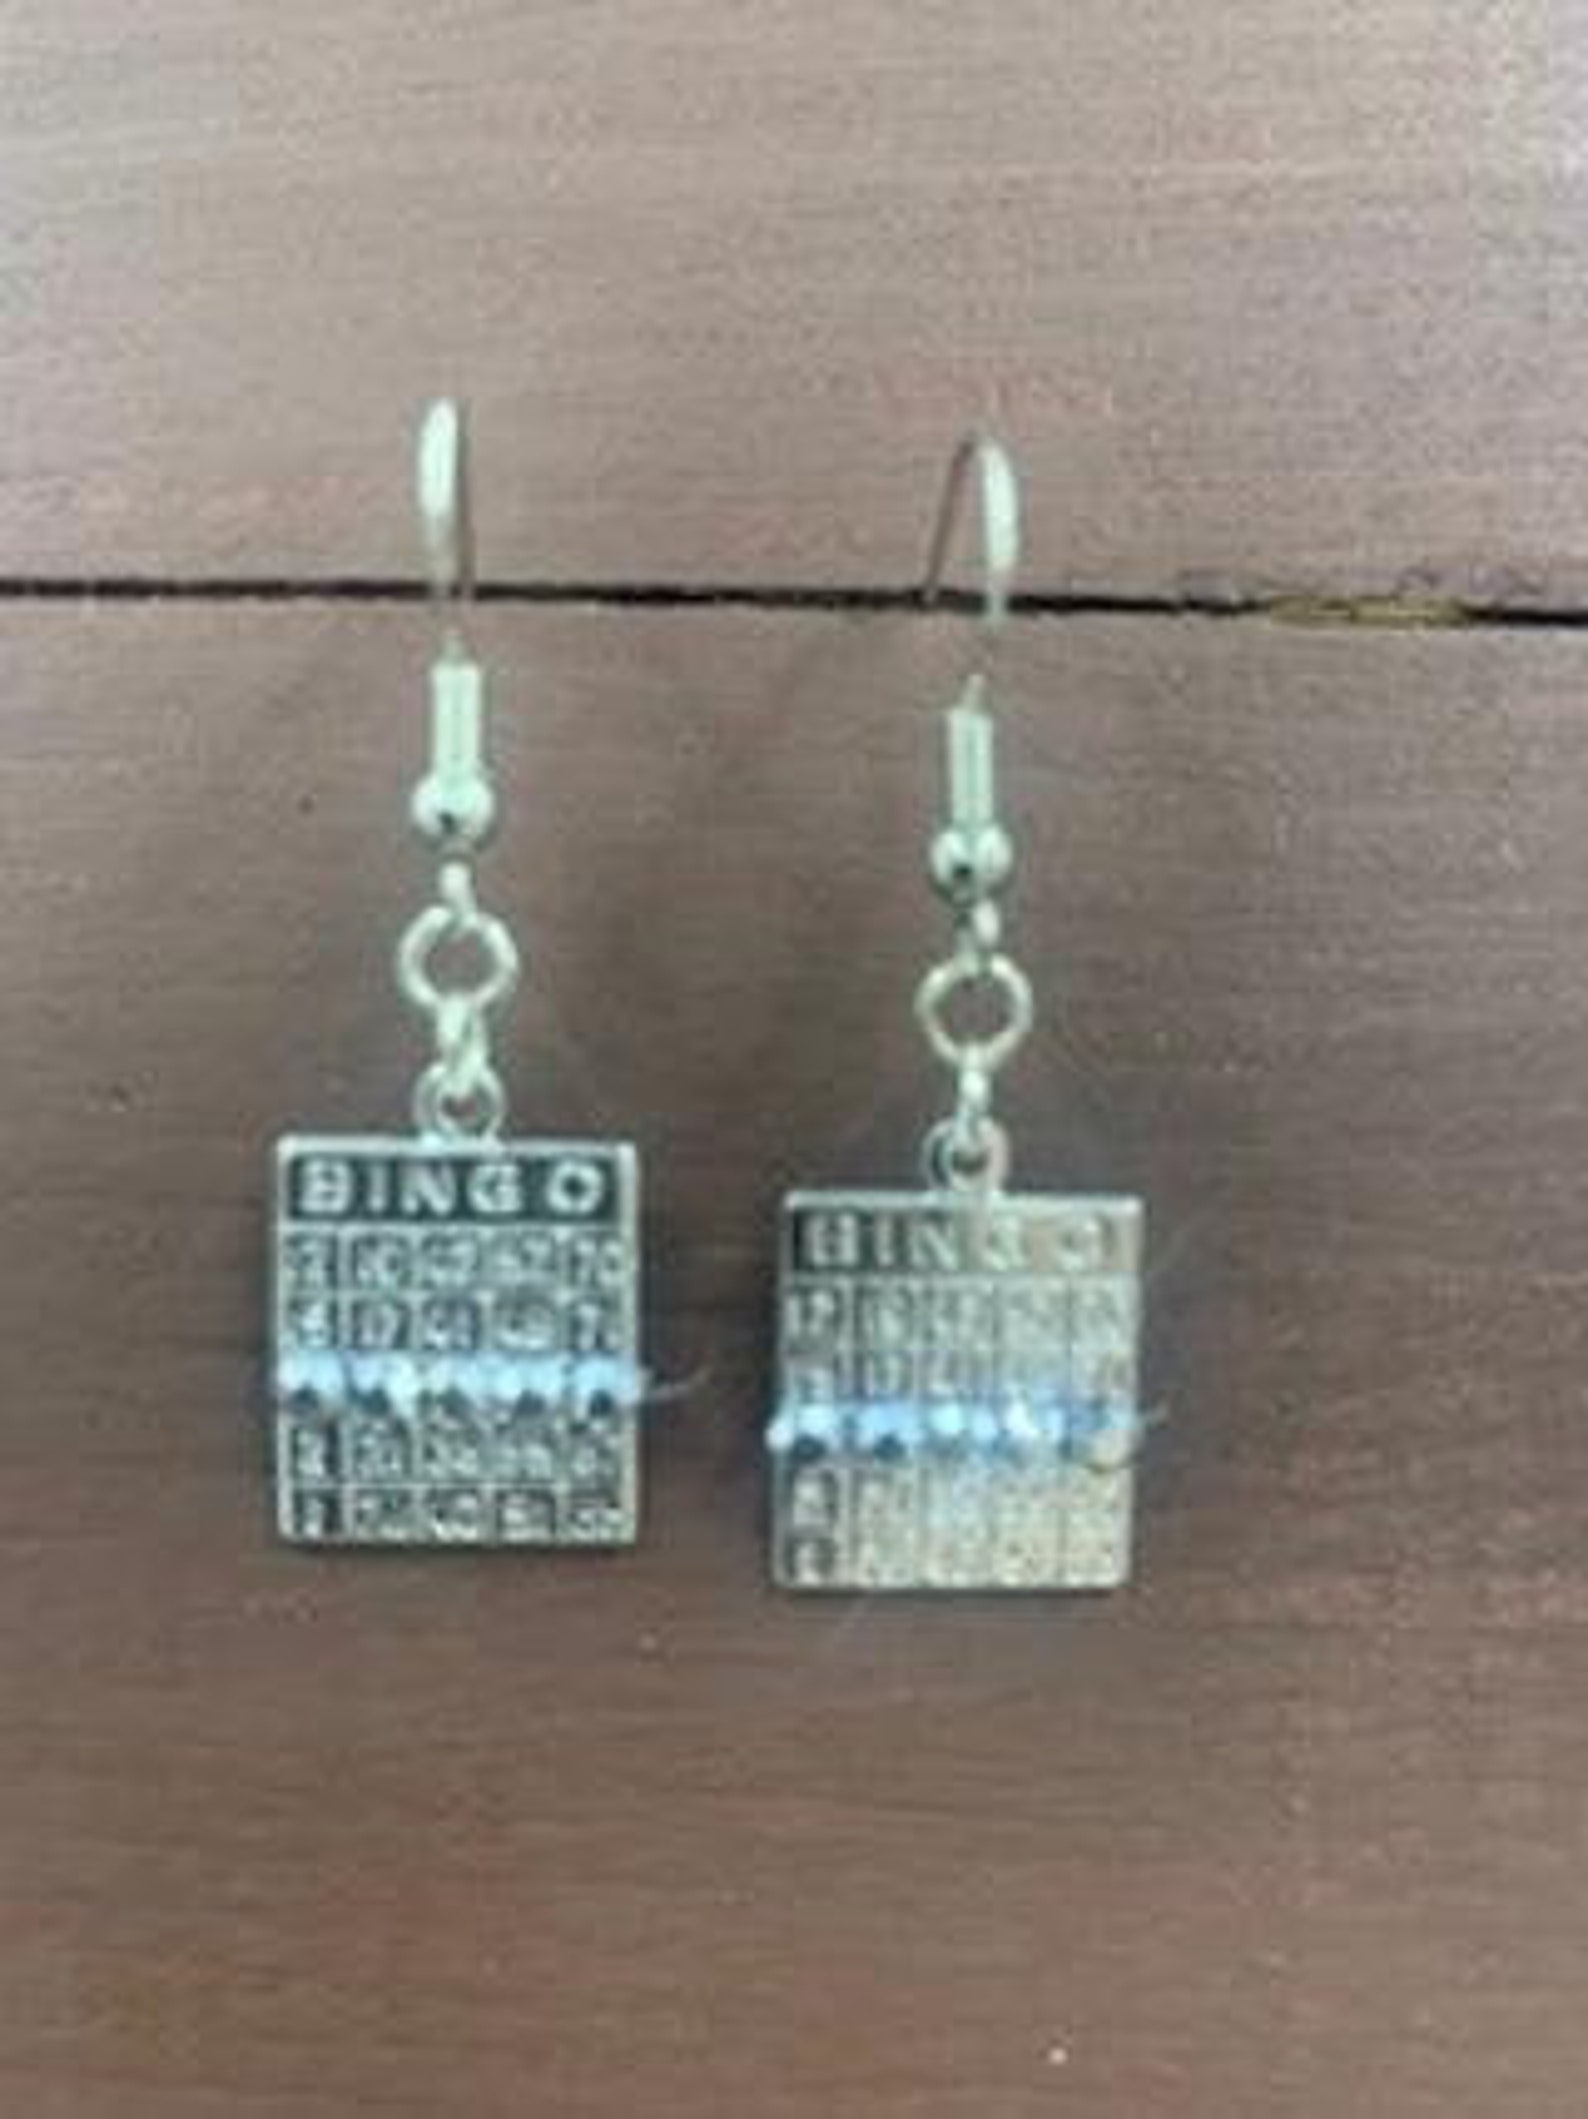 Bingo Earrings made with Swarovski Crystals | Etsy